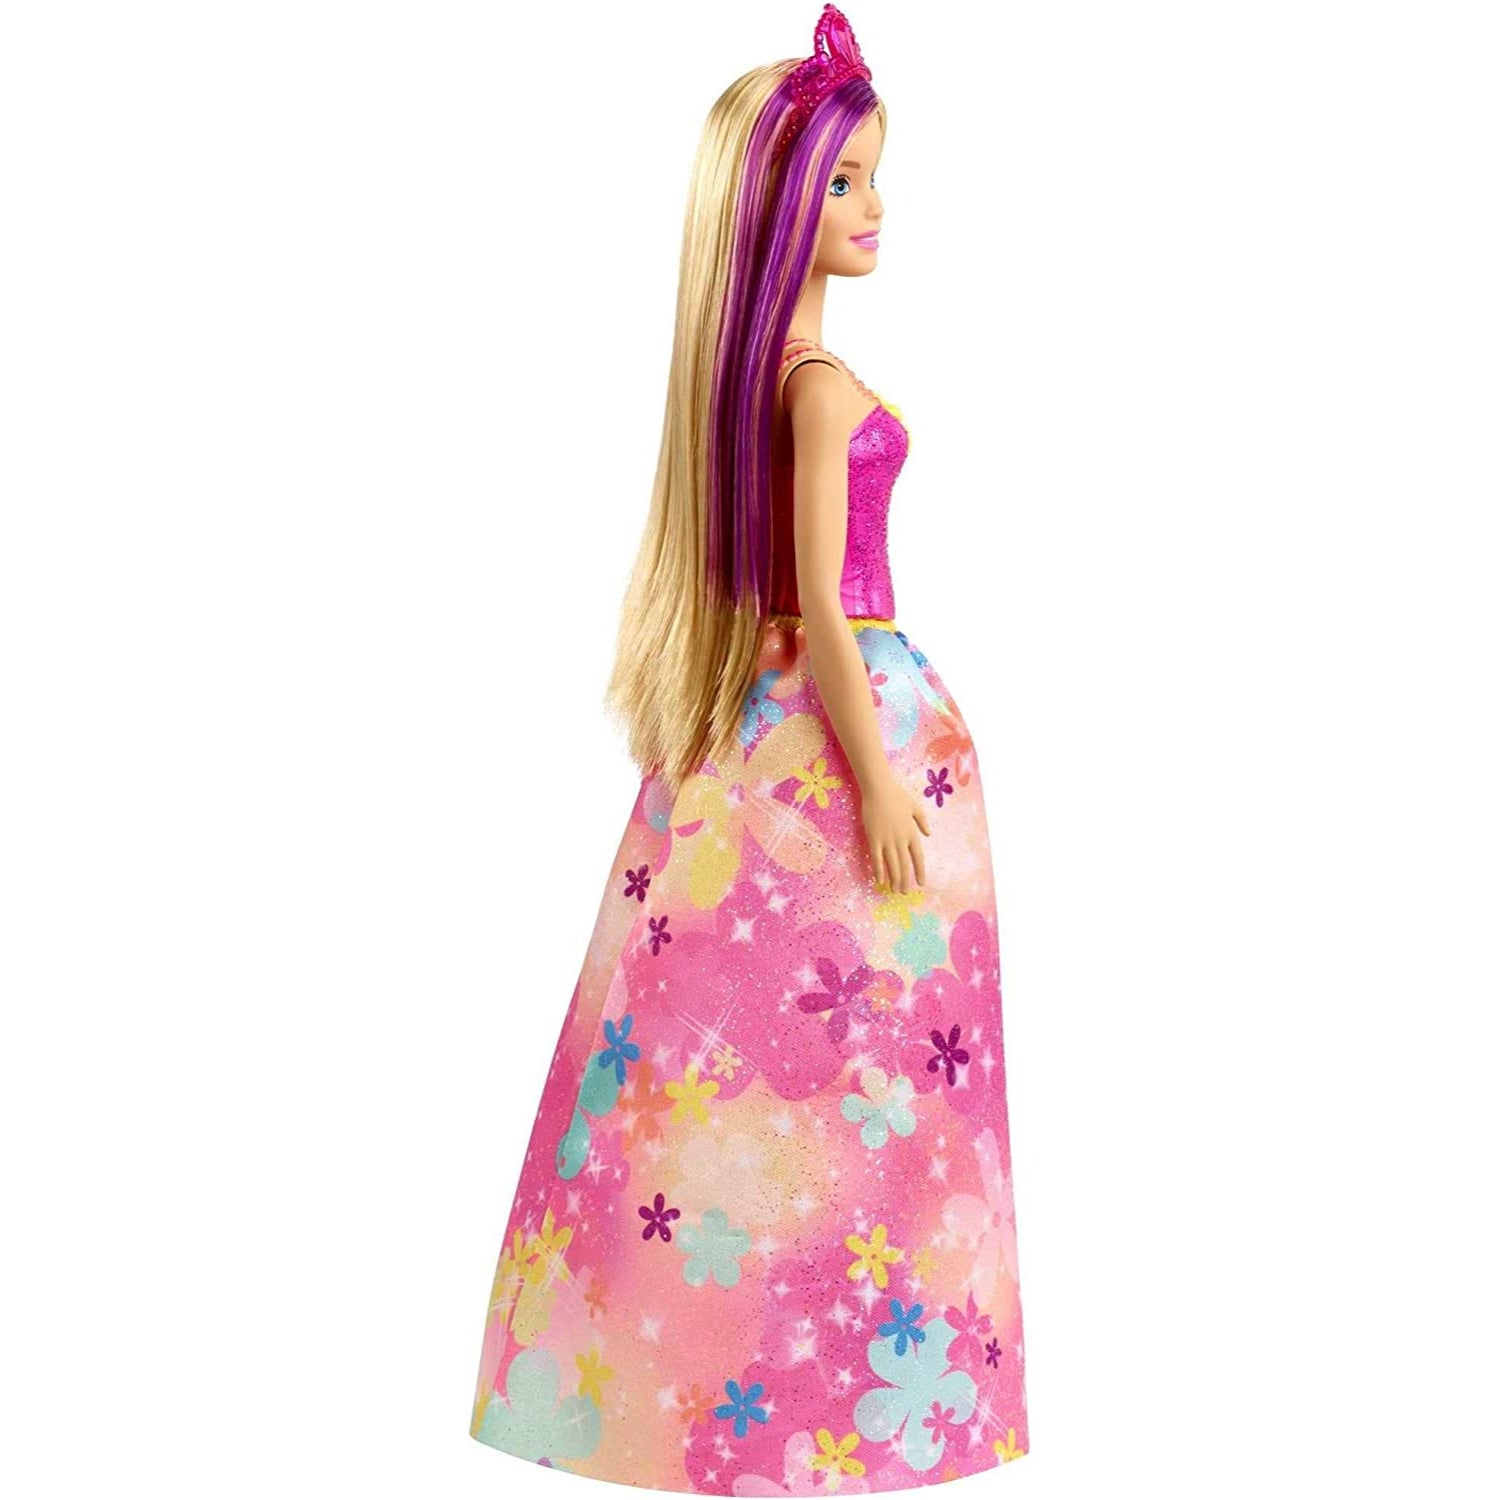 Barbie Barbie Dreamtopia Princess Doll, 12-inch, Blonde with